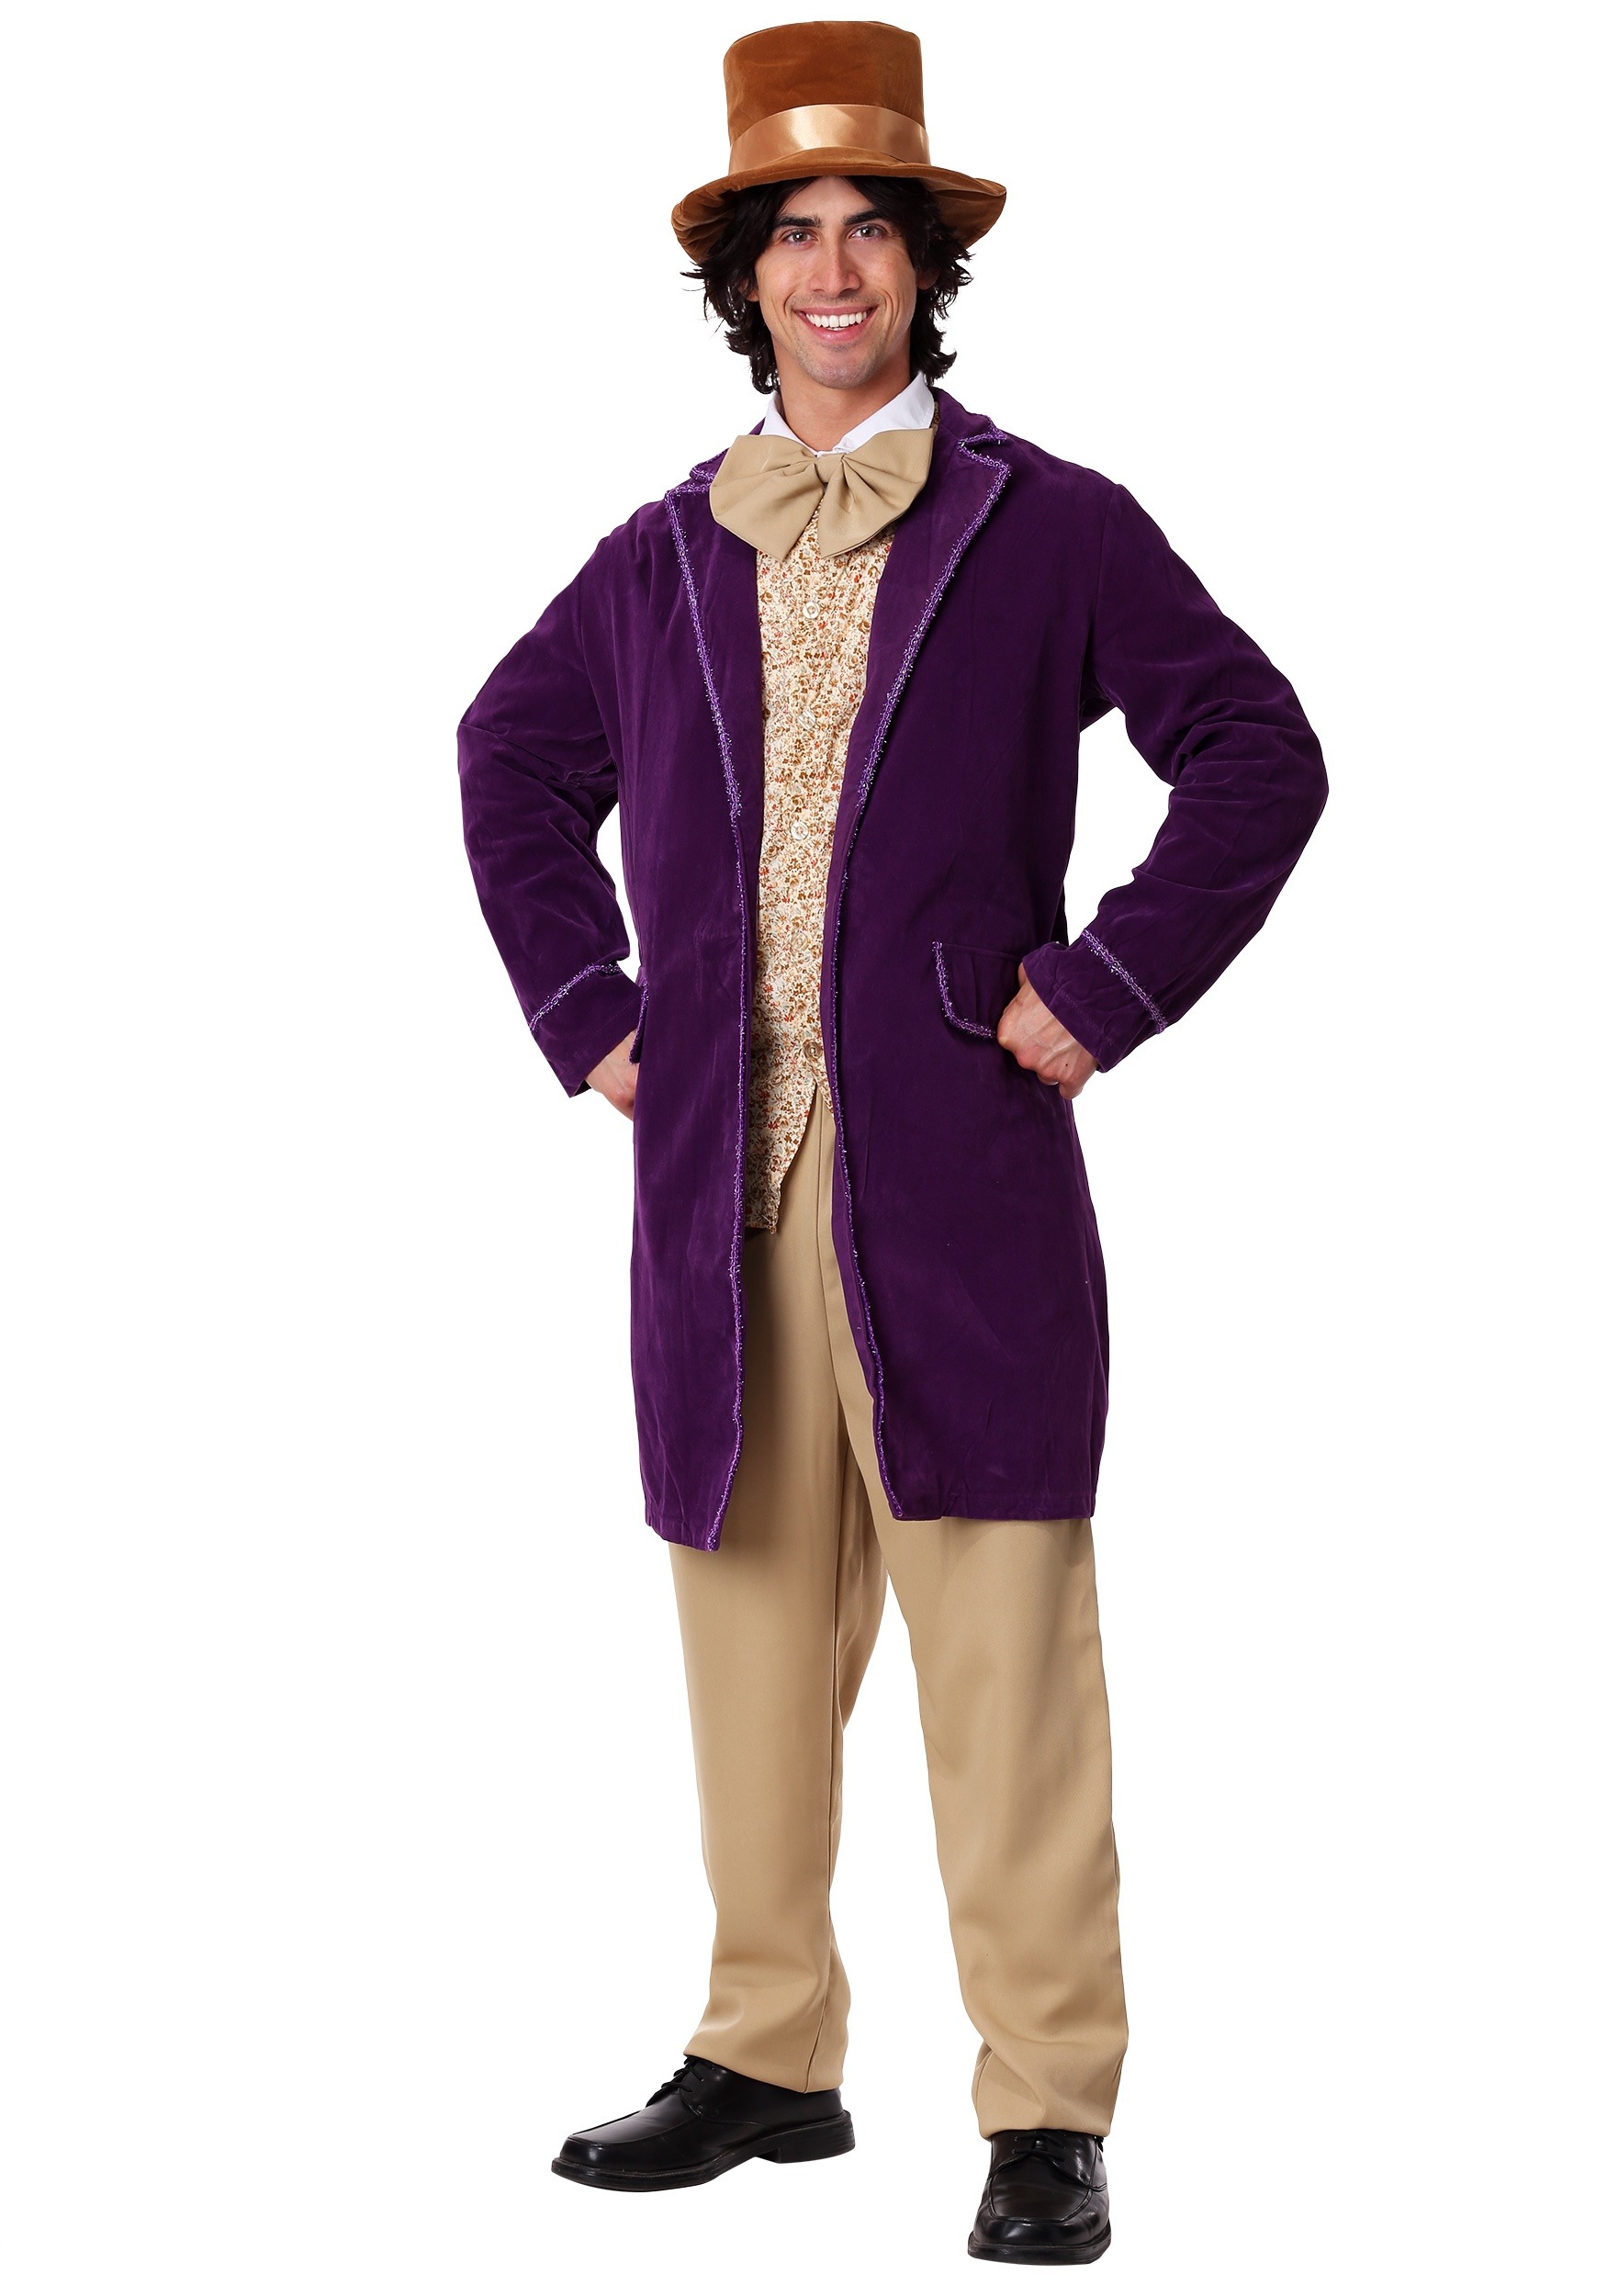 Photos - Fancy Dress Deluxe FUN Costumes Men's Exclusive Candy Man Costume Purple/Beige FUN2095AD 